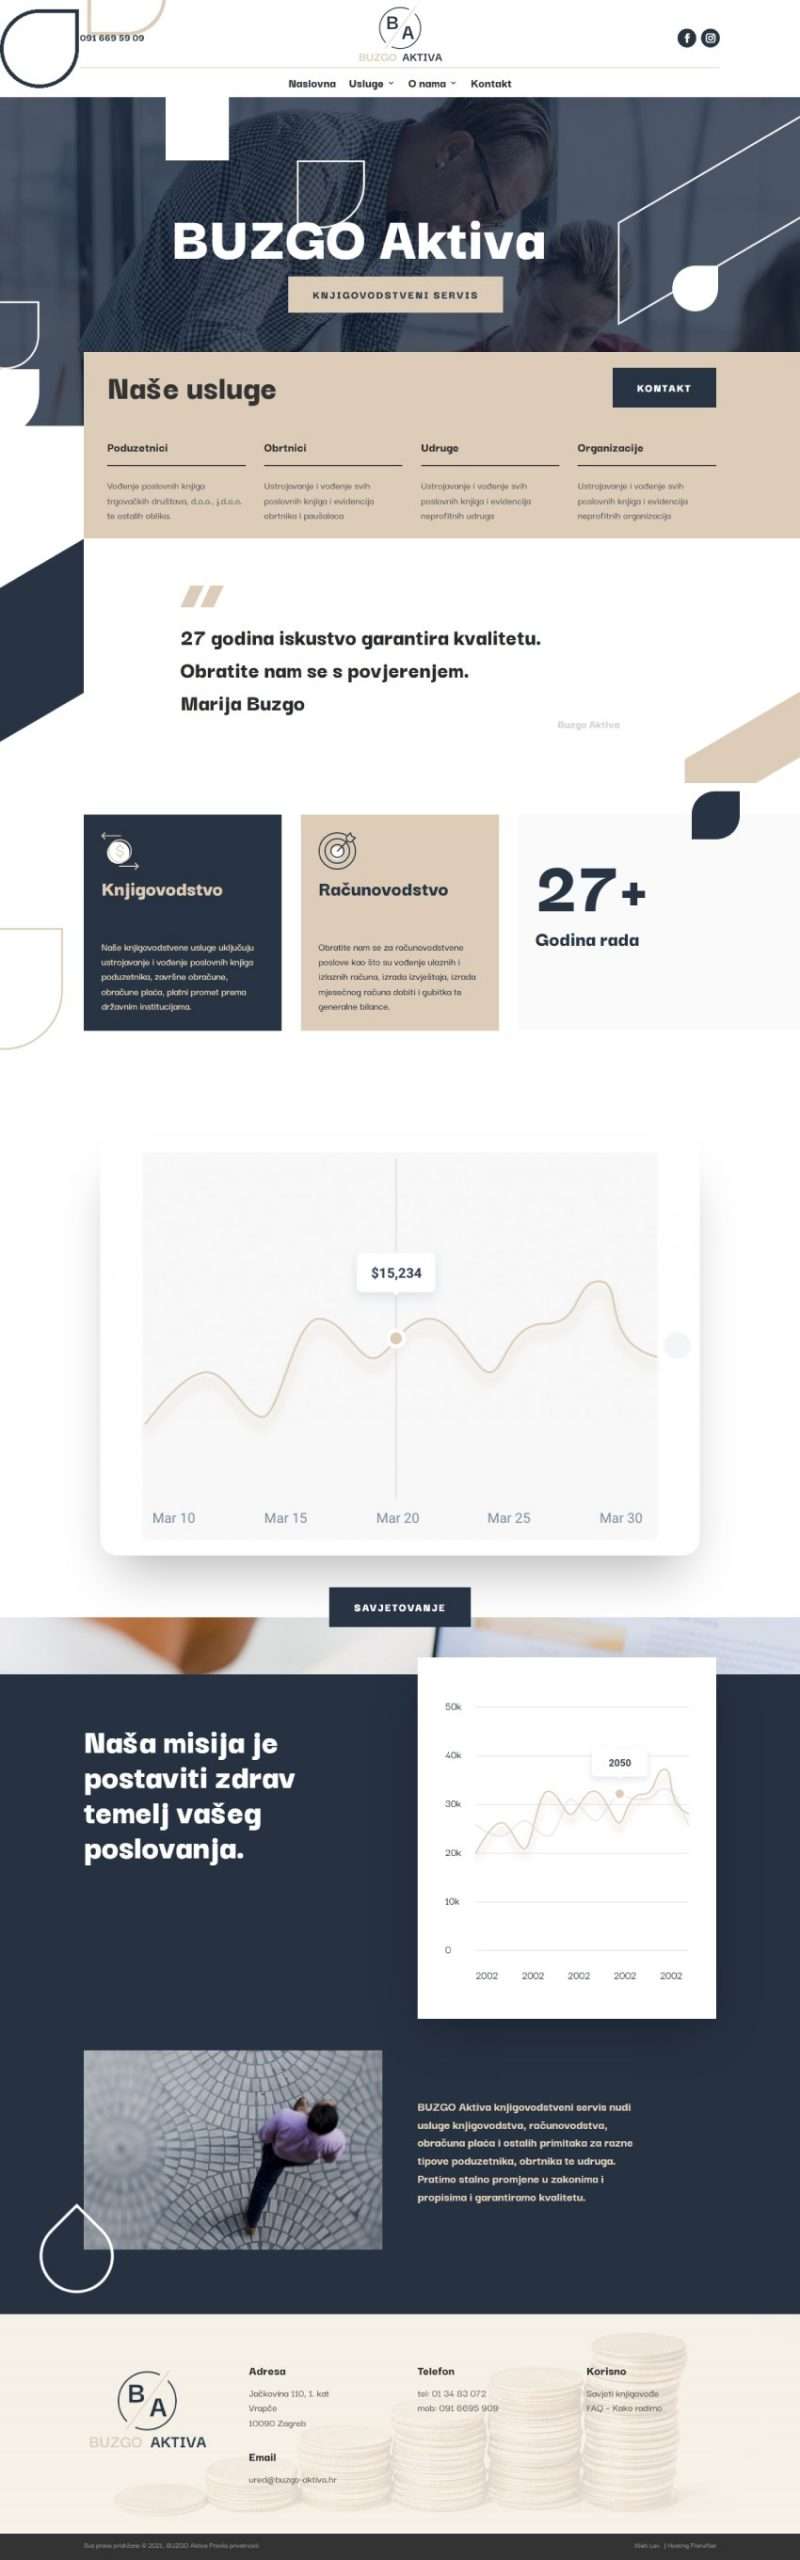 meli web designer portfolio - accountant page Buzgo Aktiva